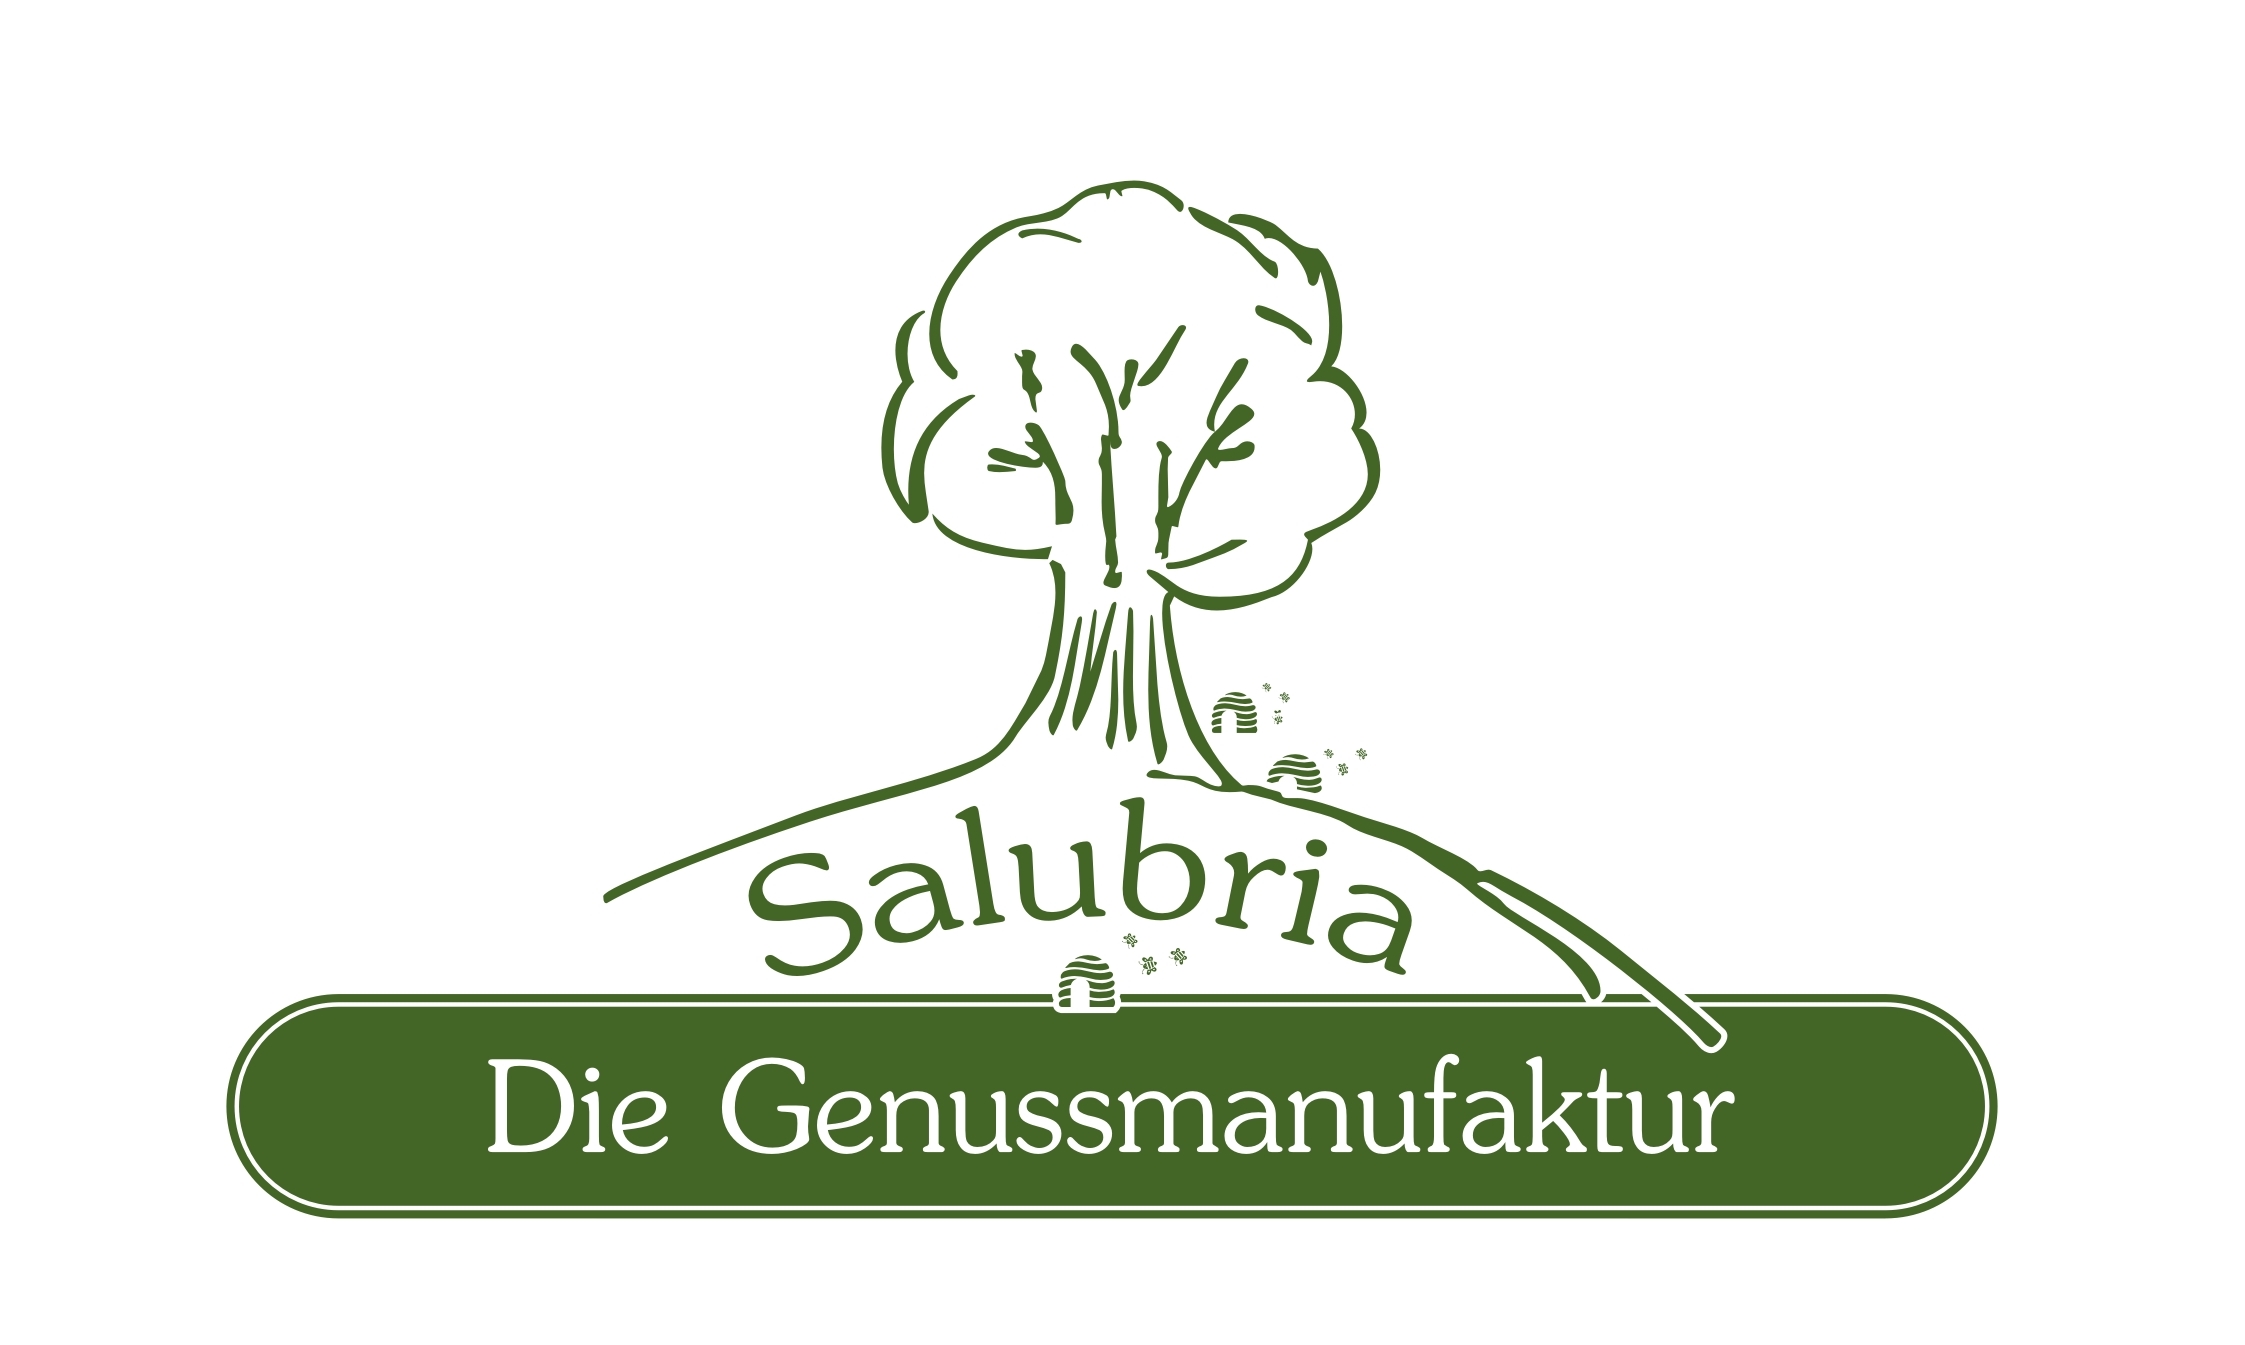 Salubria - Die Genussmanufaktur - Logo